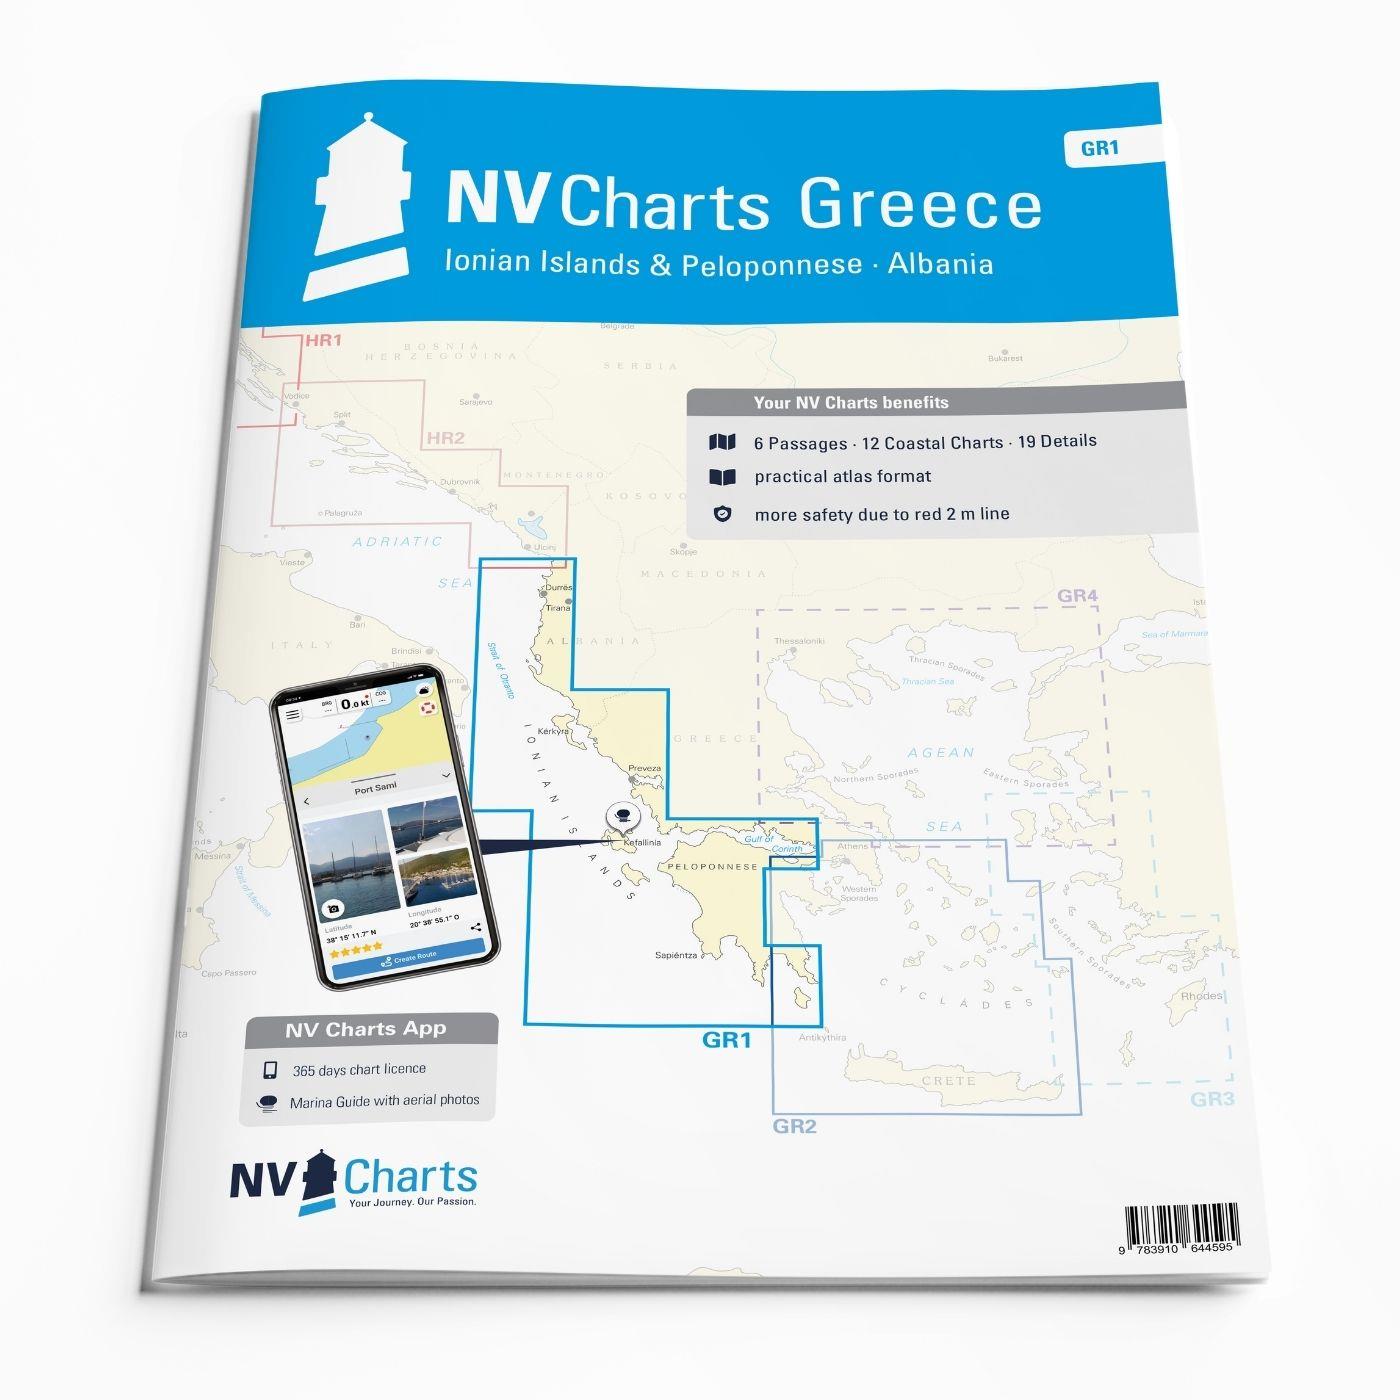 NV Charts Greece GR1 - Ionian Islands & Peloponnese - Albania